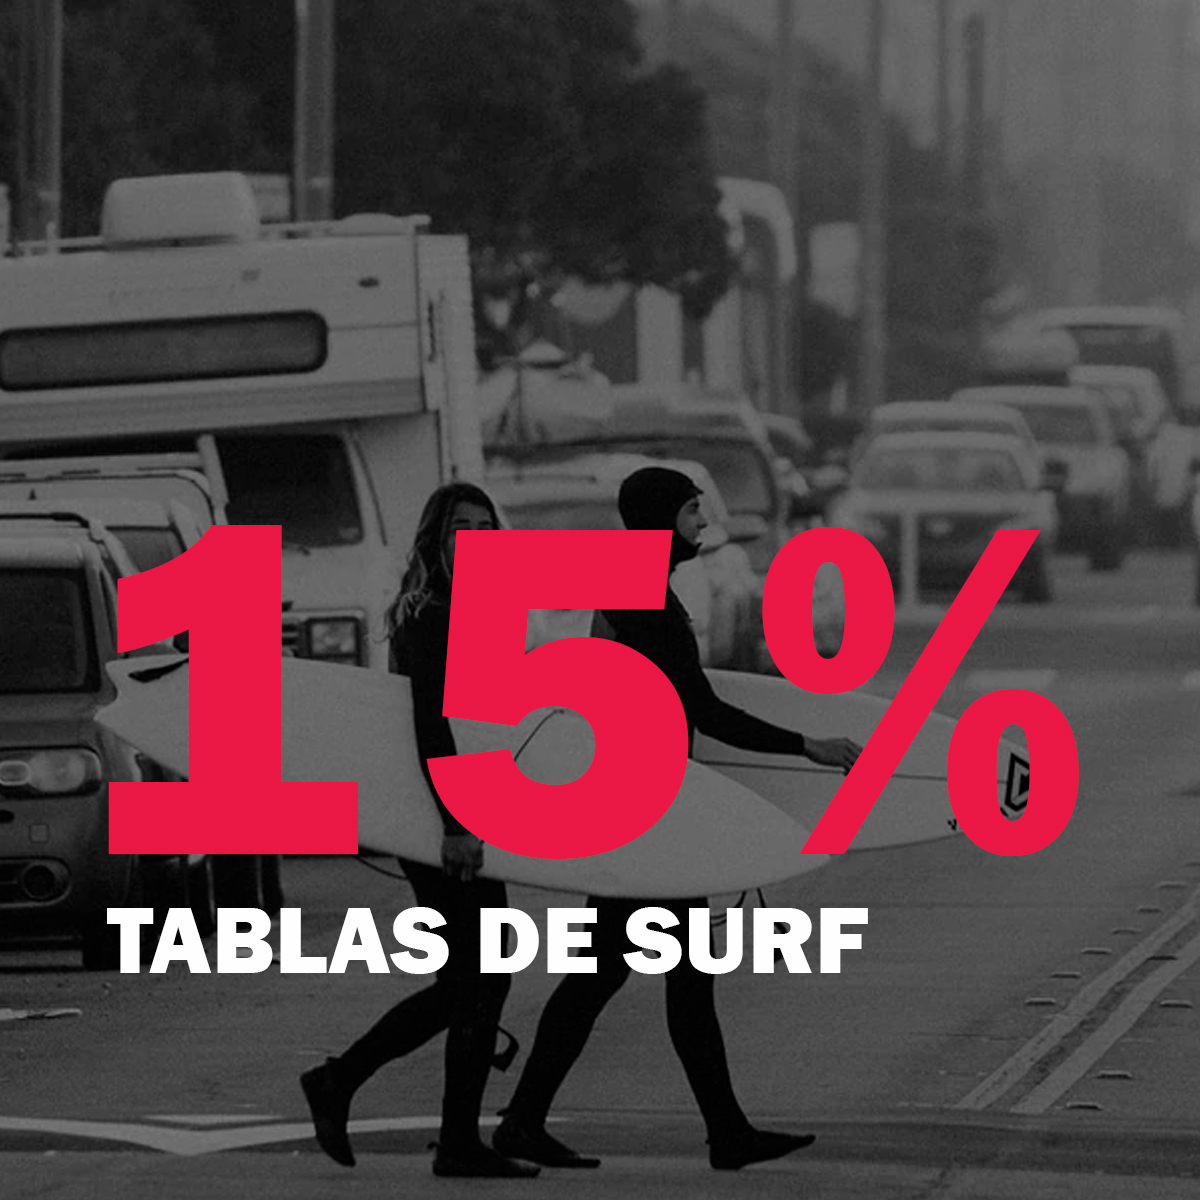 BLACK FRIDAY TABLAS DE SURF